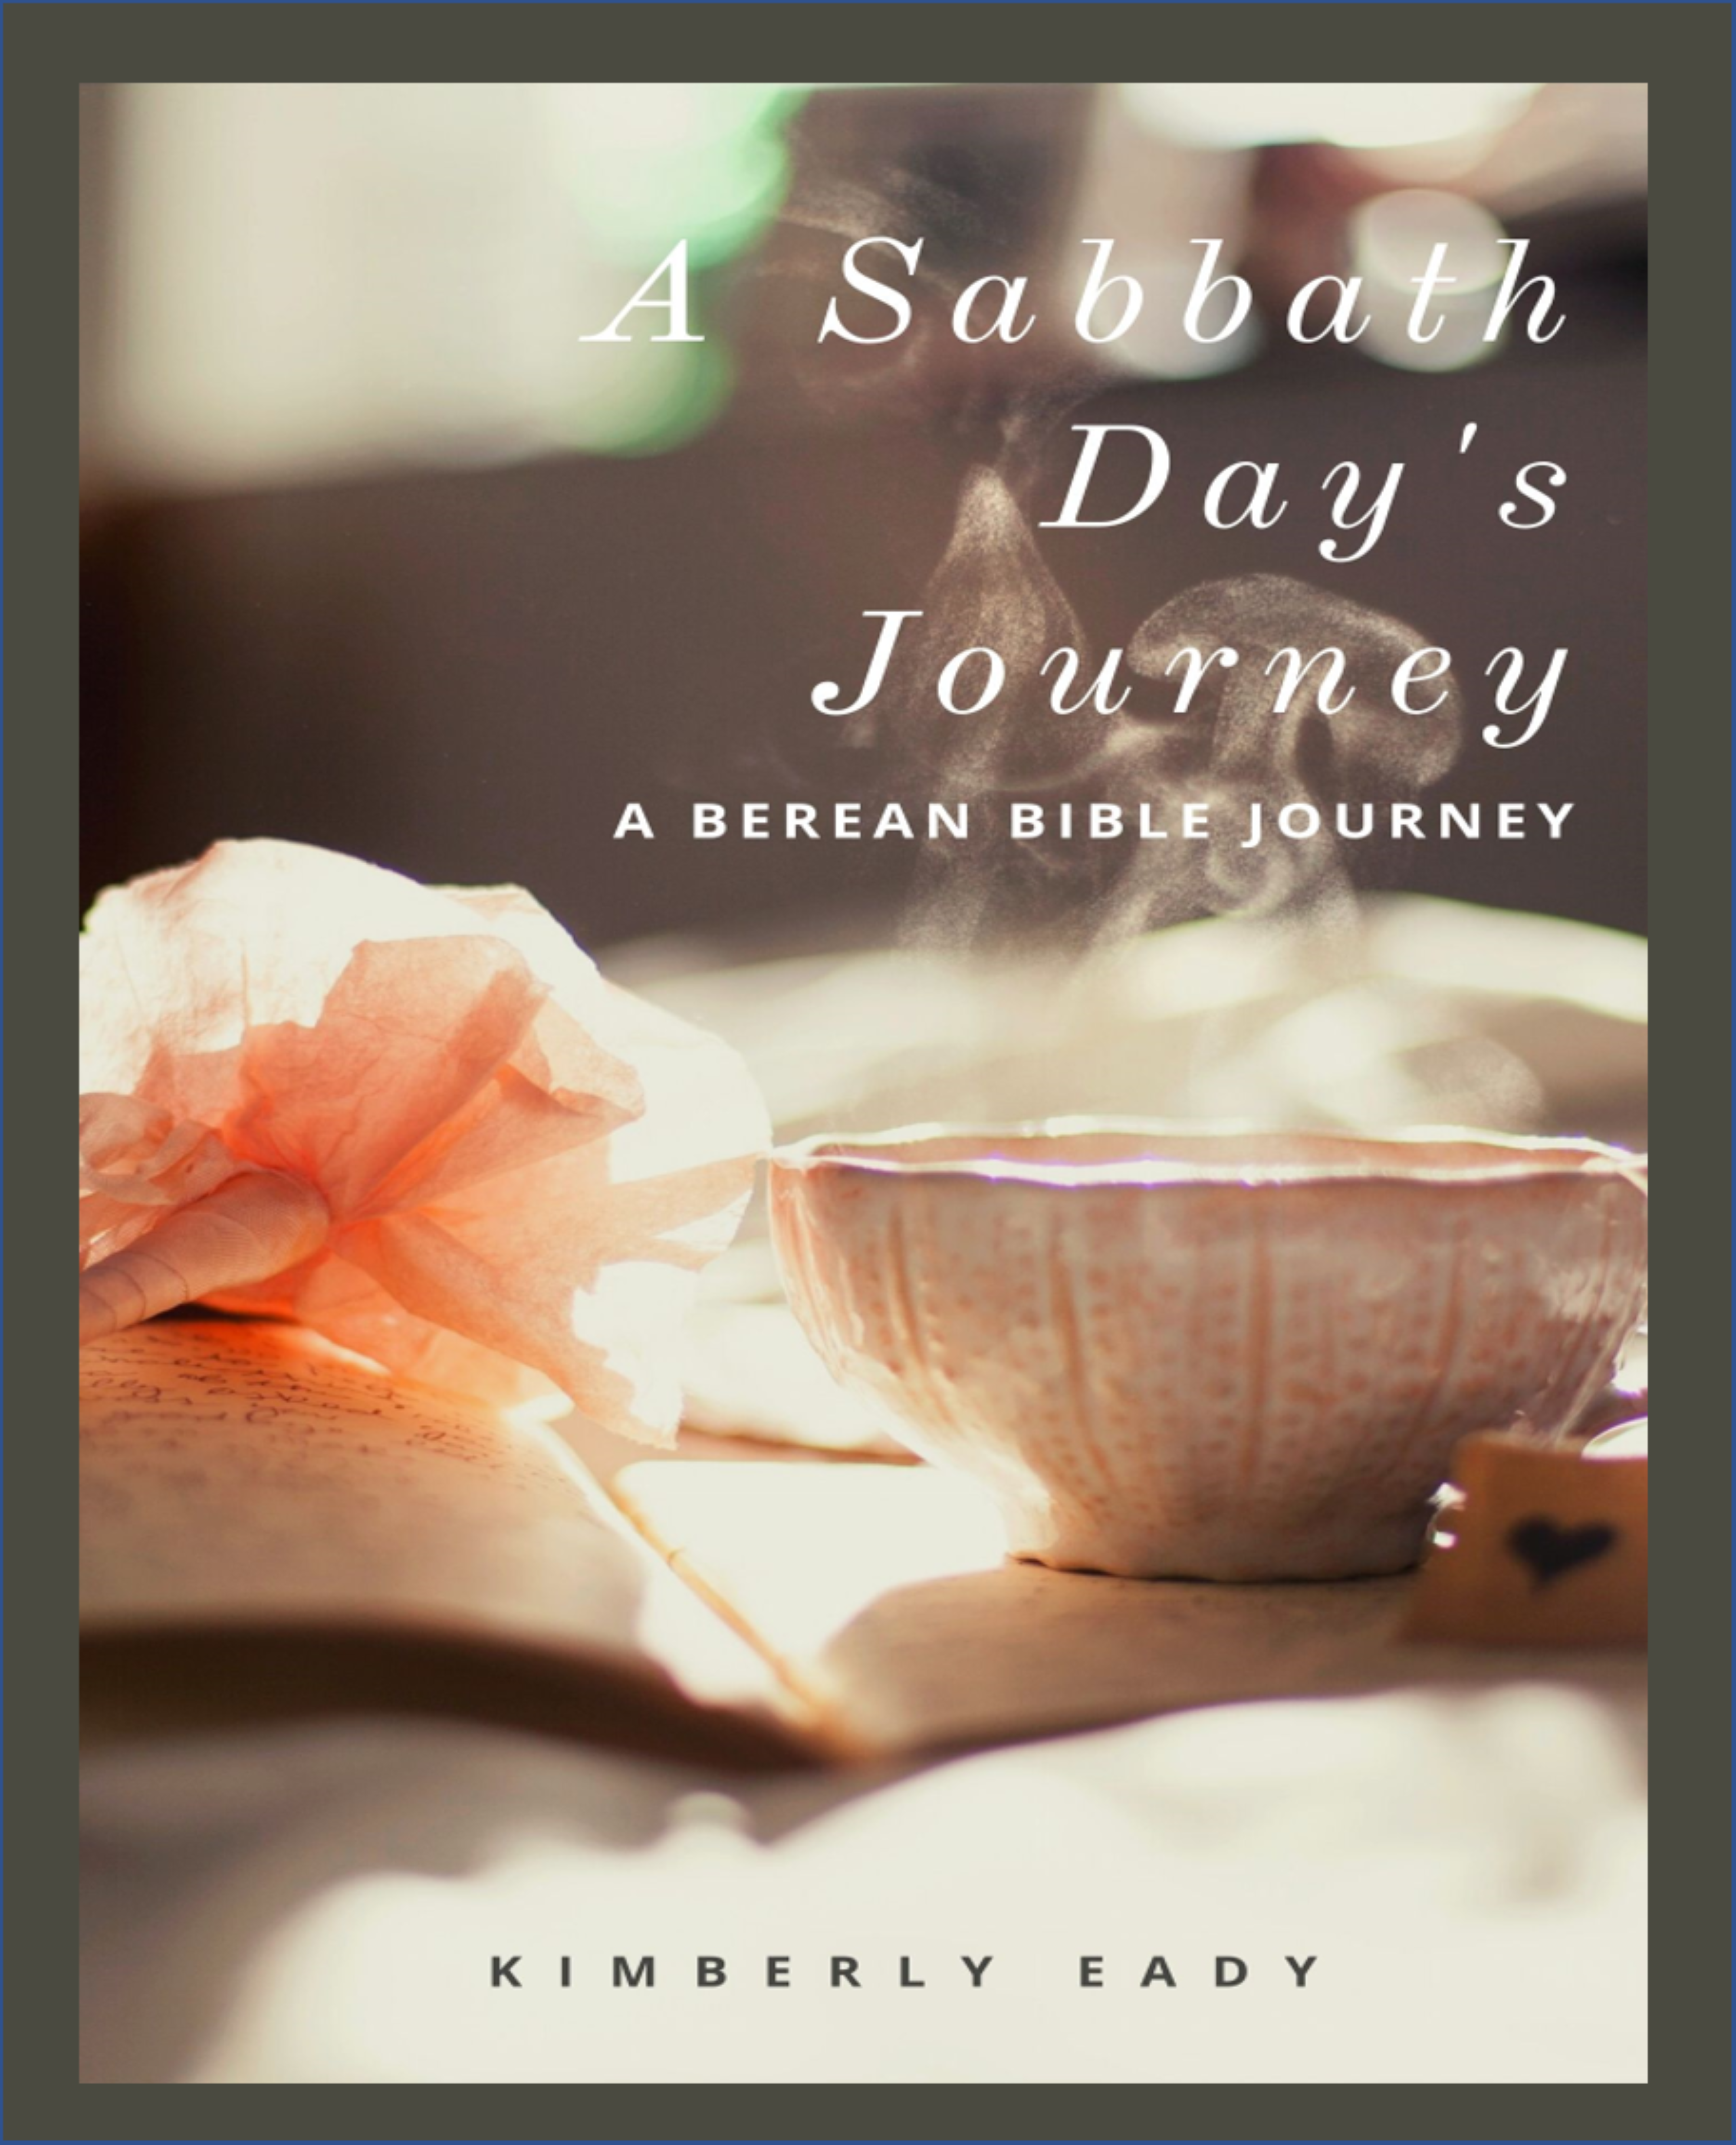 how far is sabbath day journey